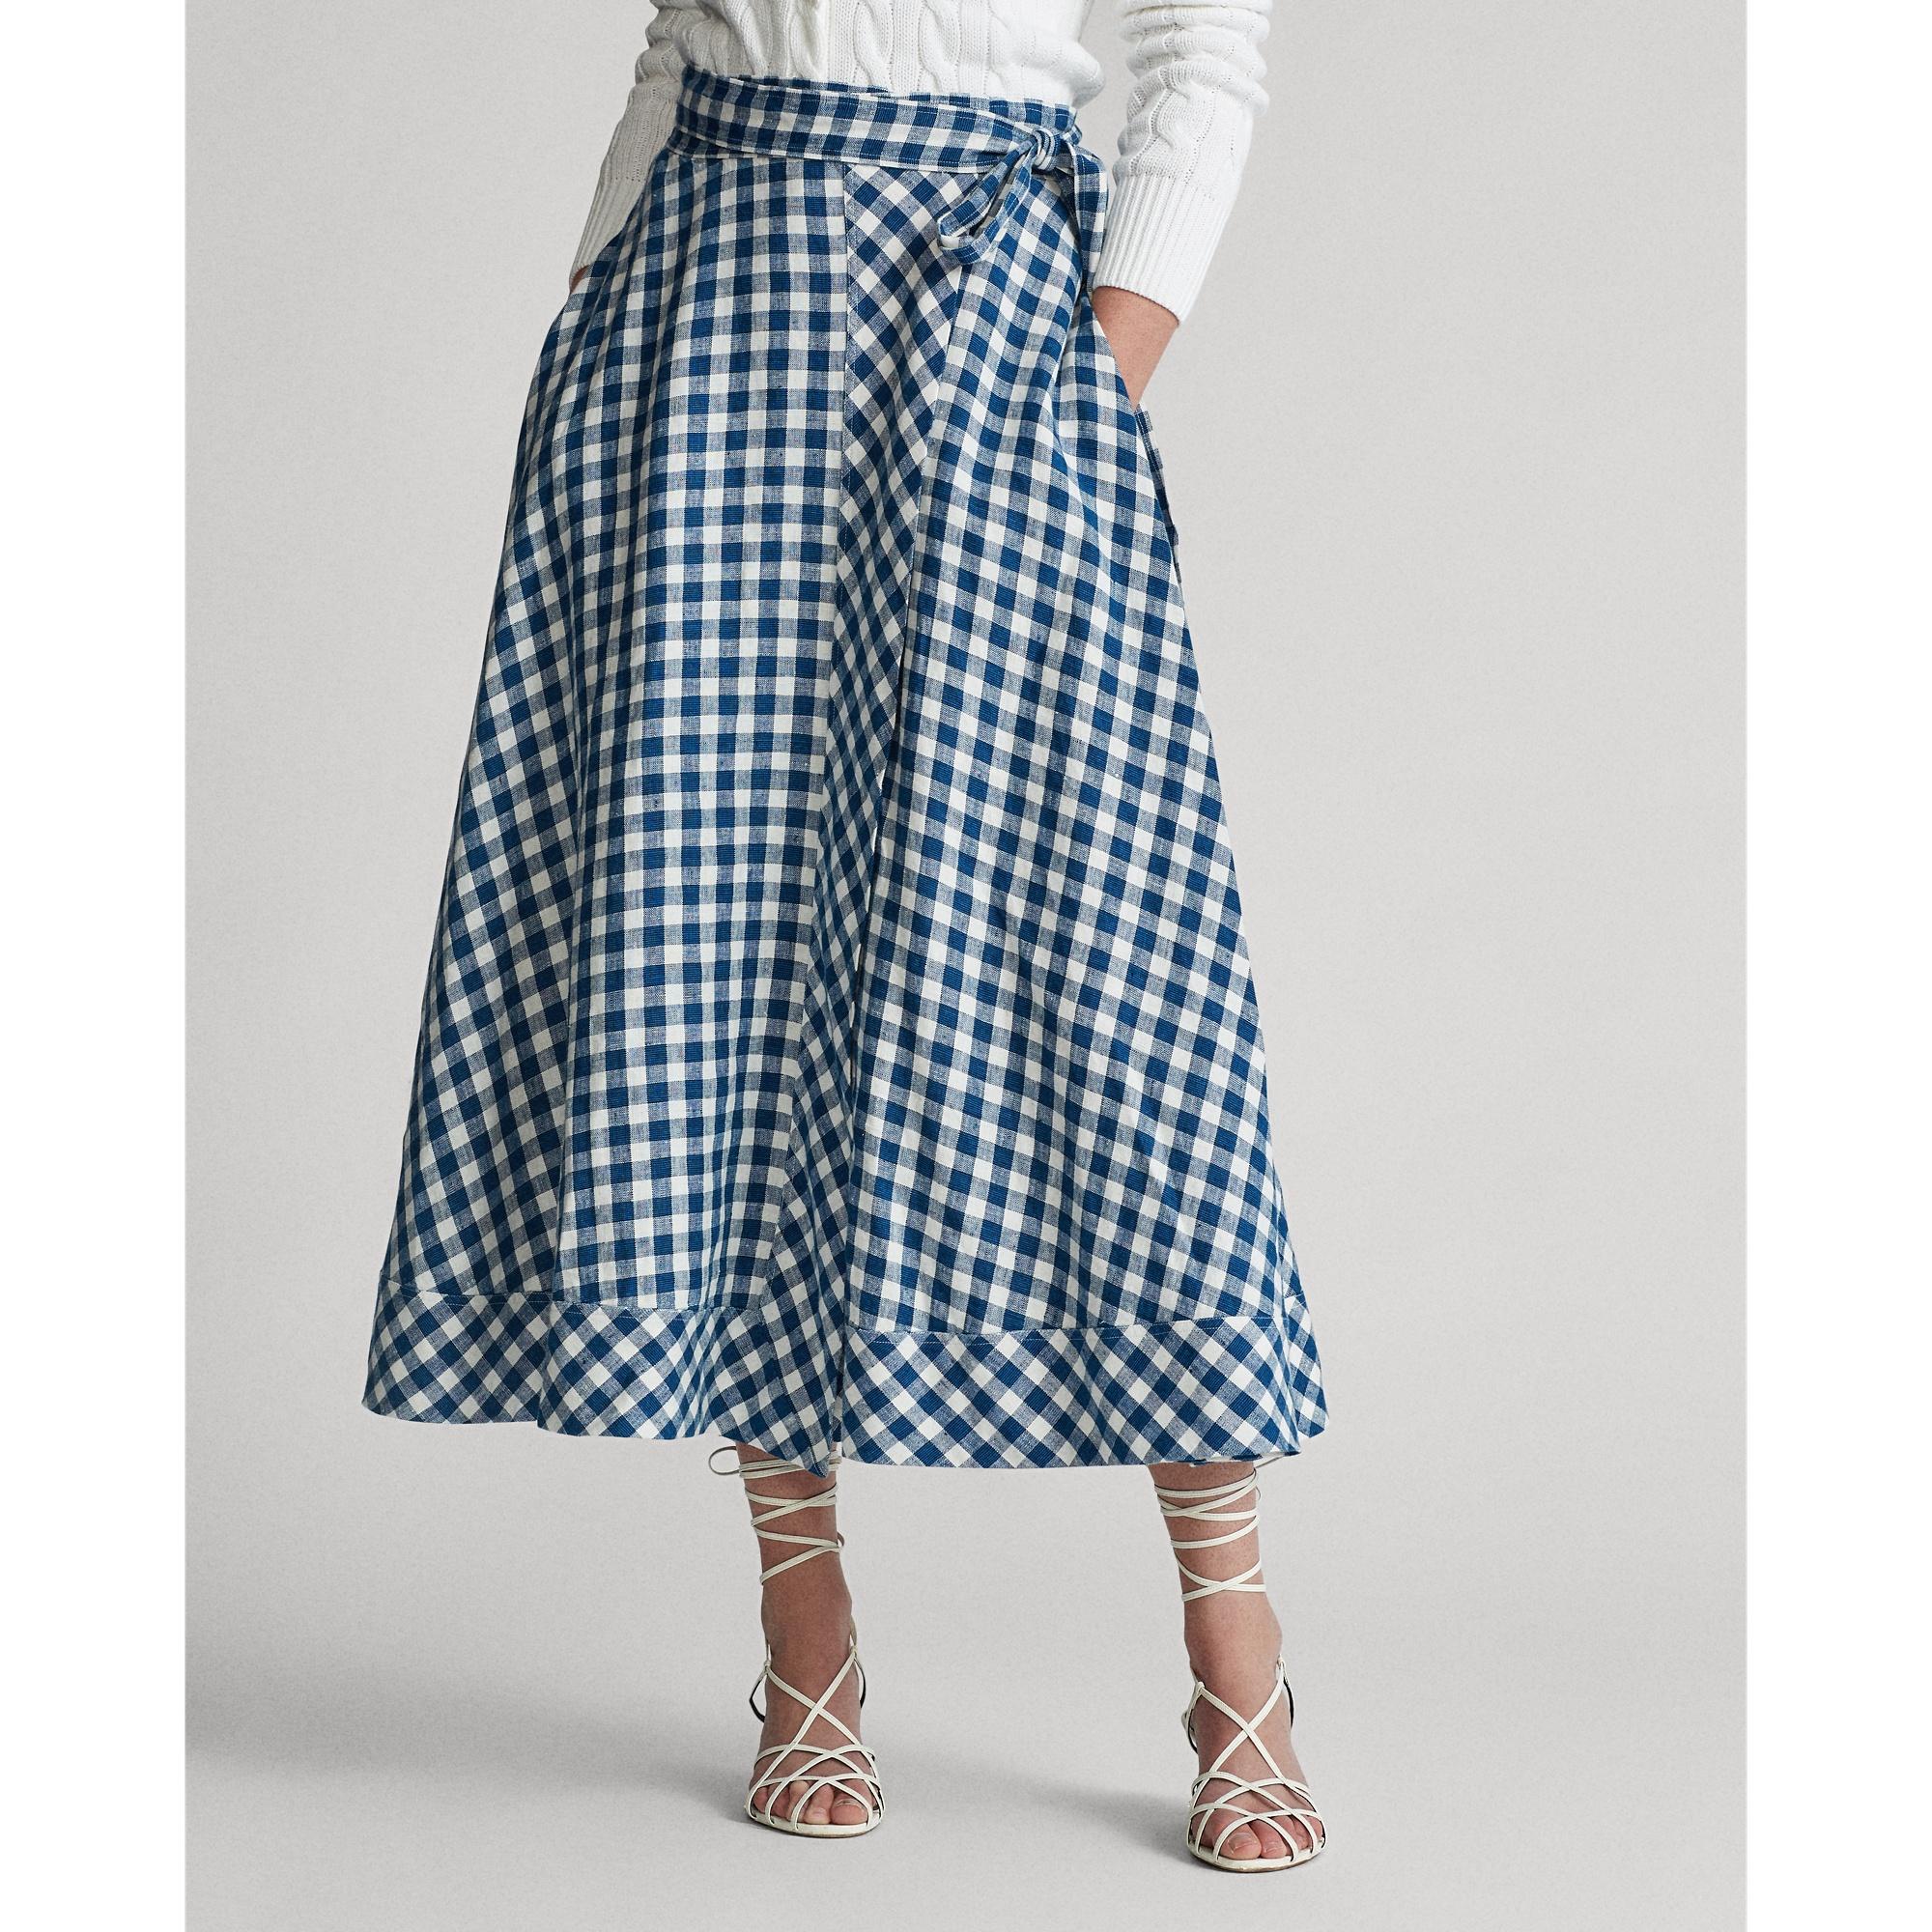 Polo Ralph Lauren Gingham Linen Wrap Skirt in Blue | Lyst